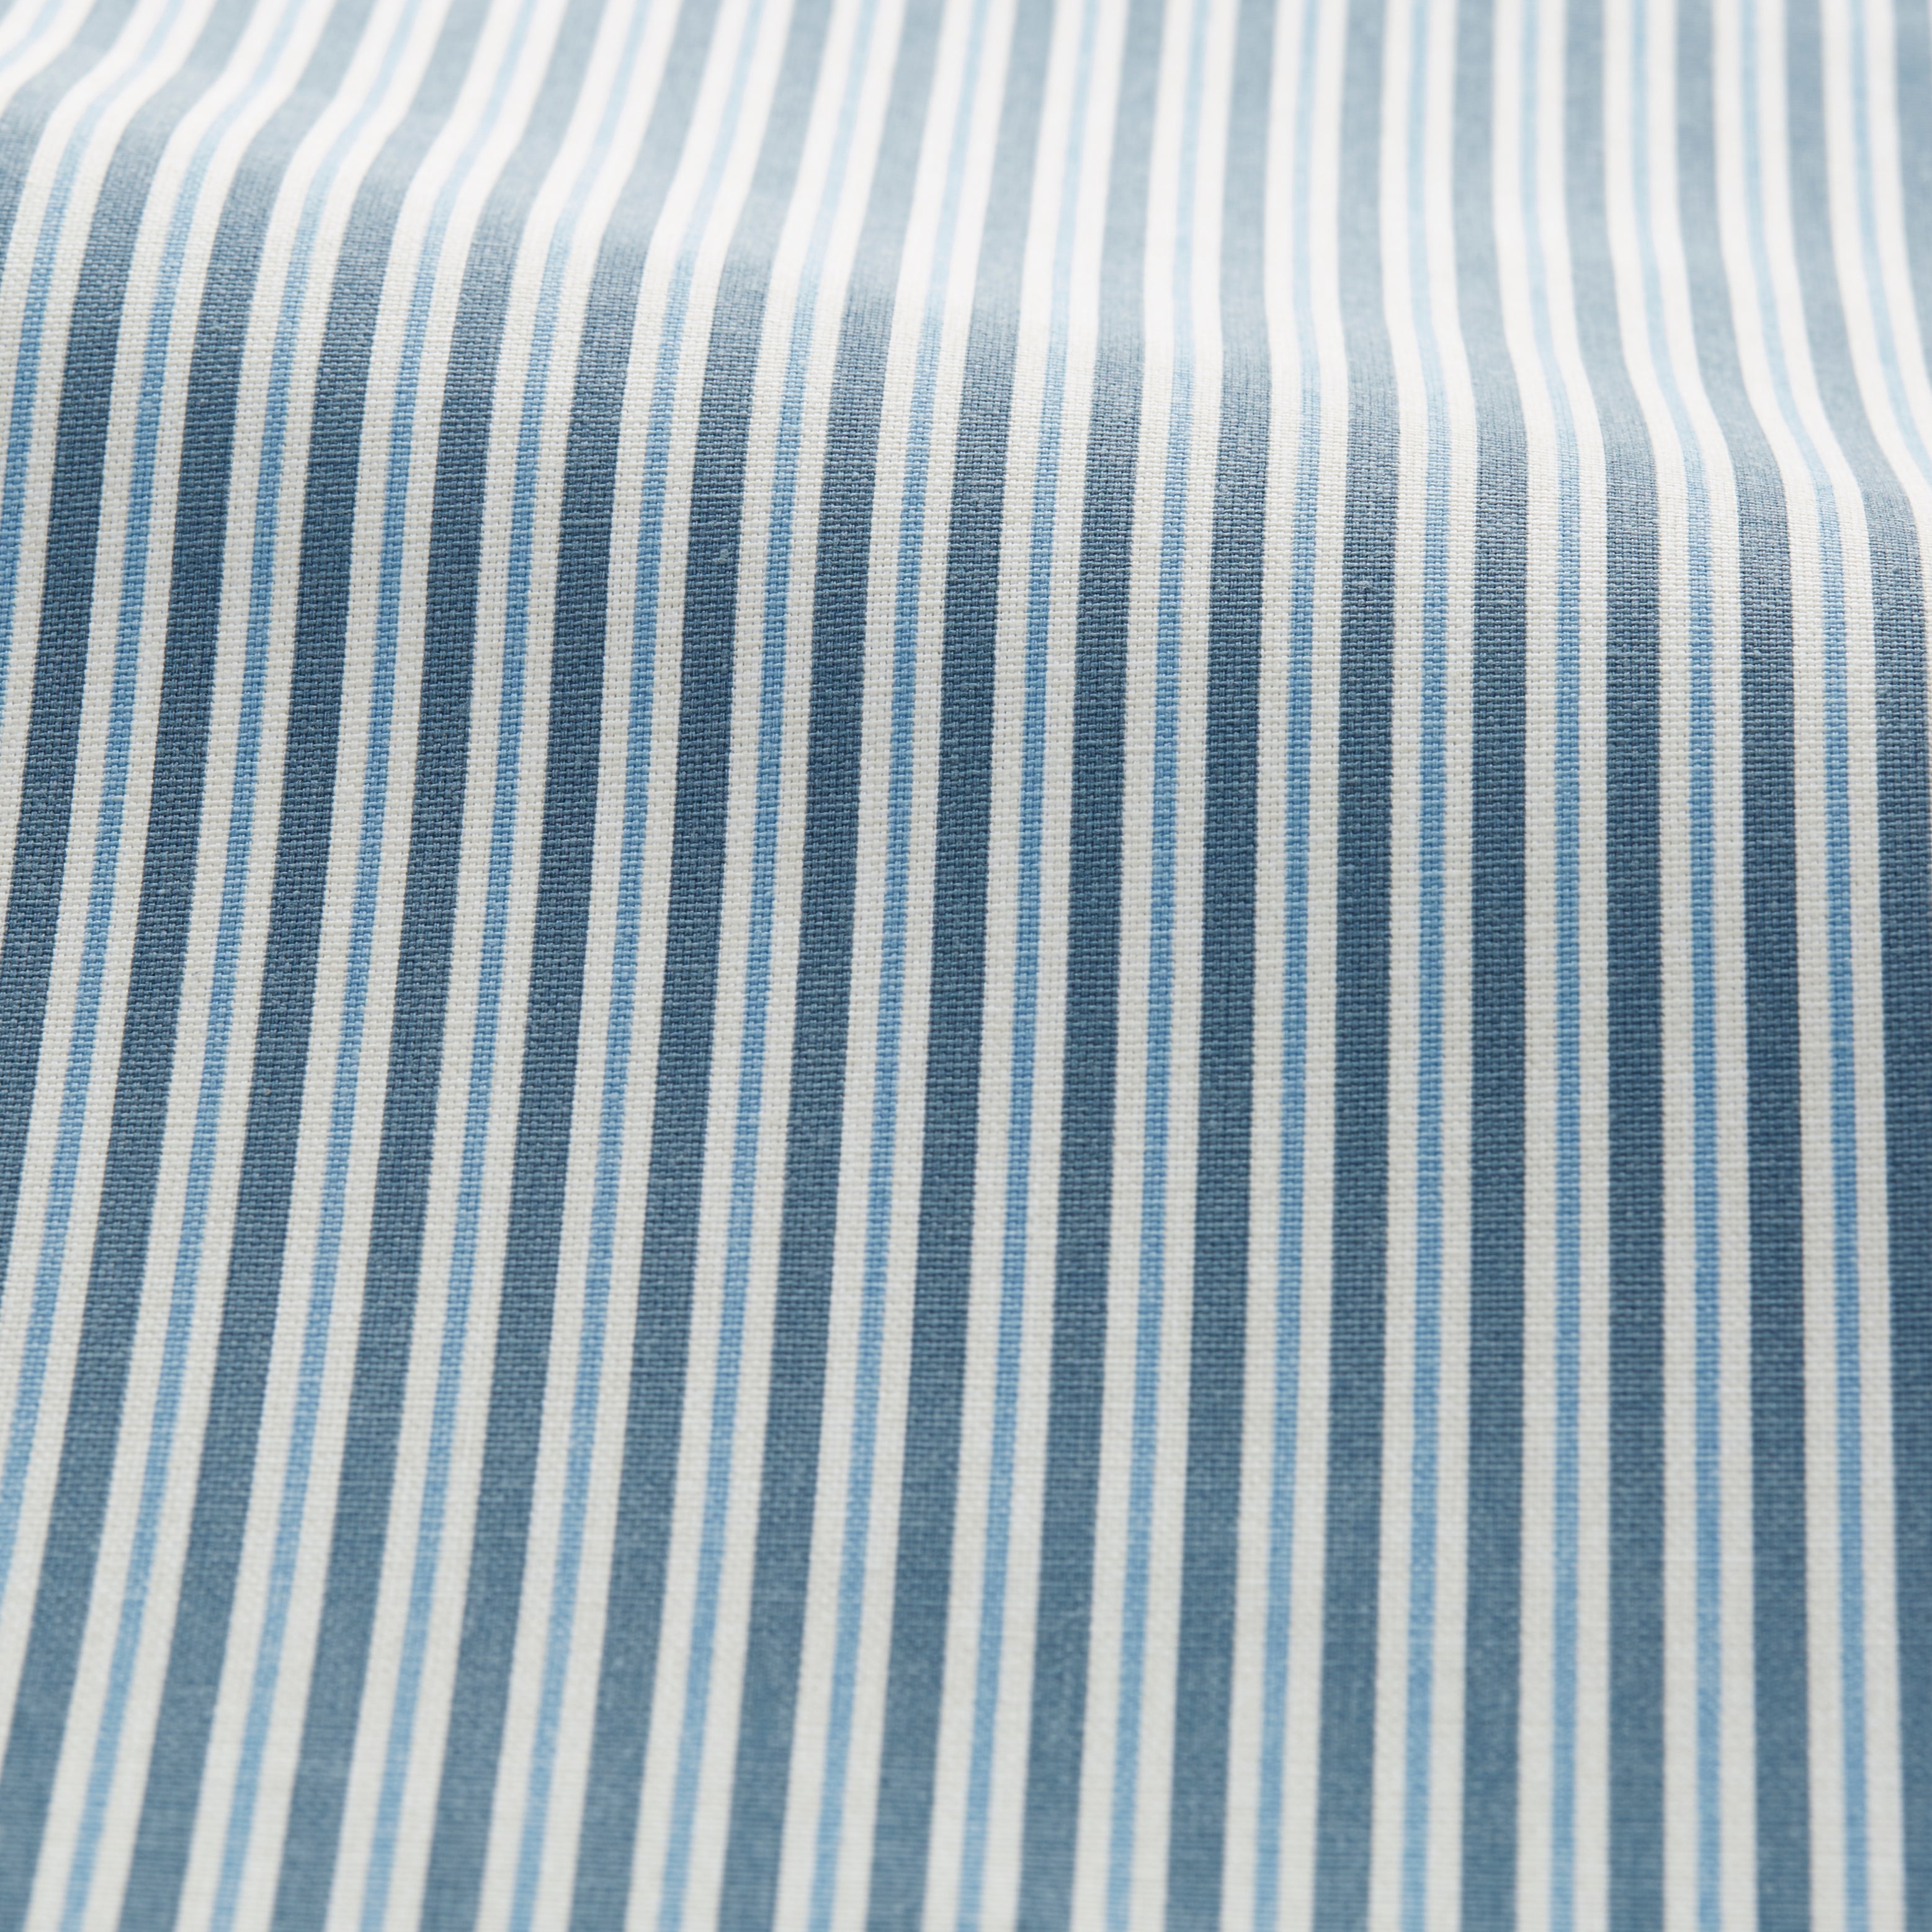 Bay Stripe Made to Measure Fabric By The Metre Bay Stripe Indigo